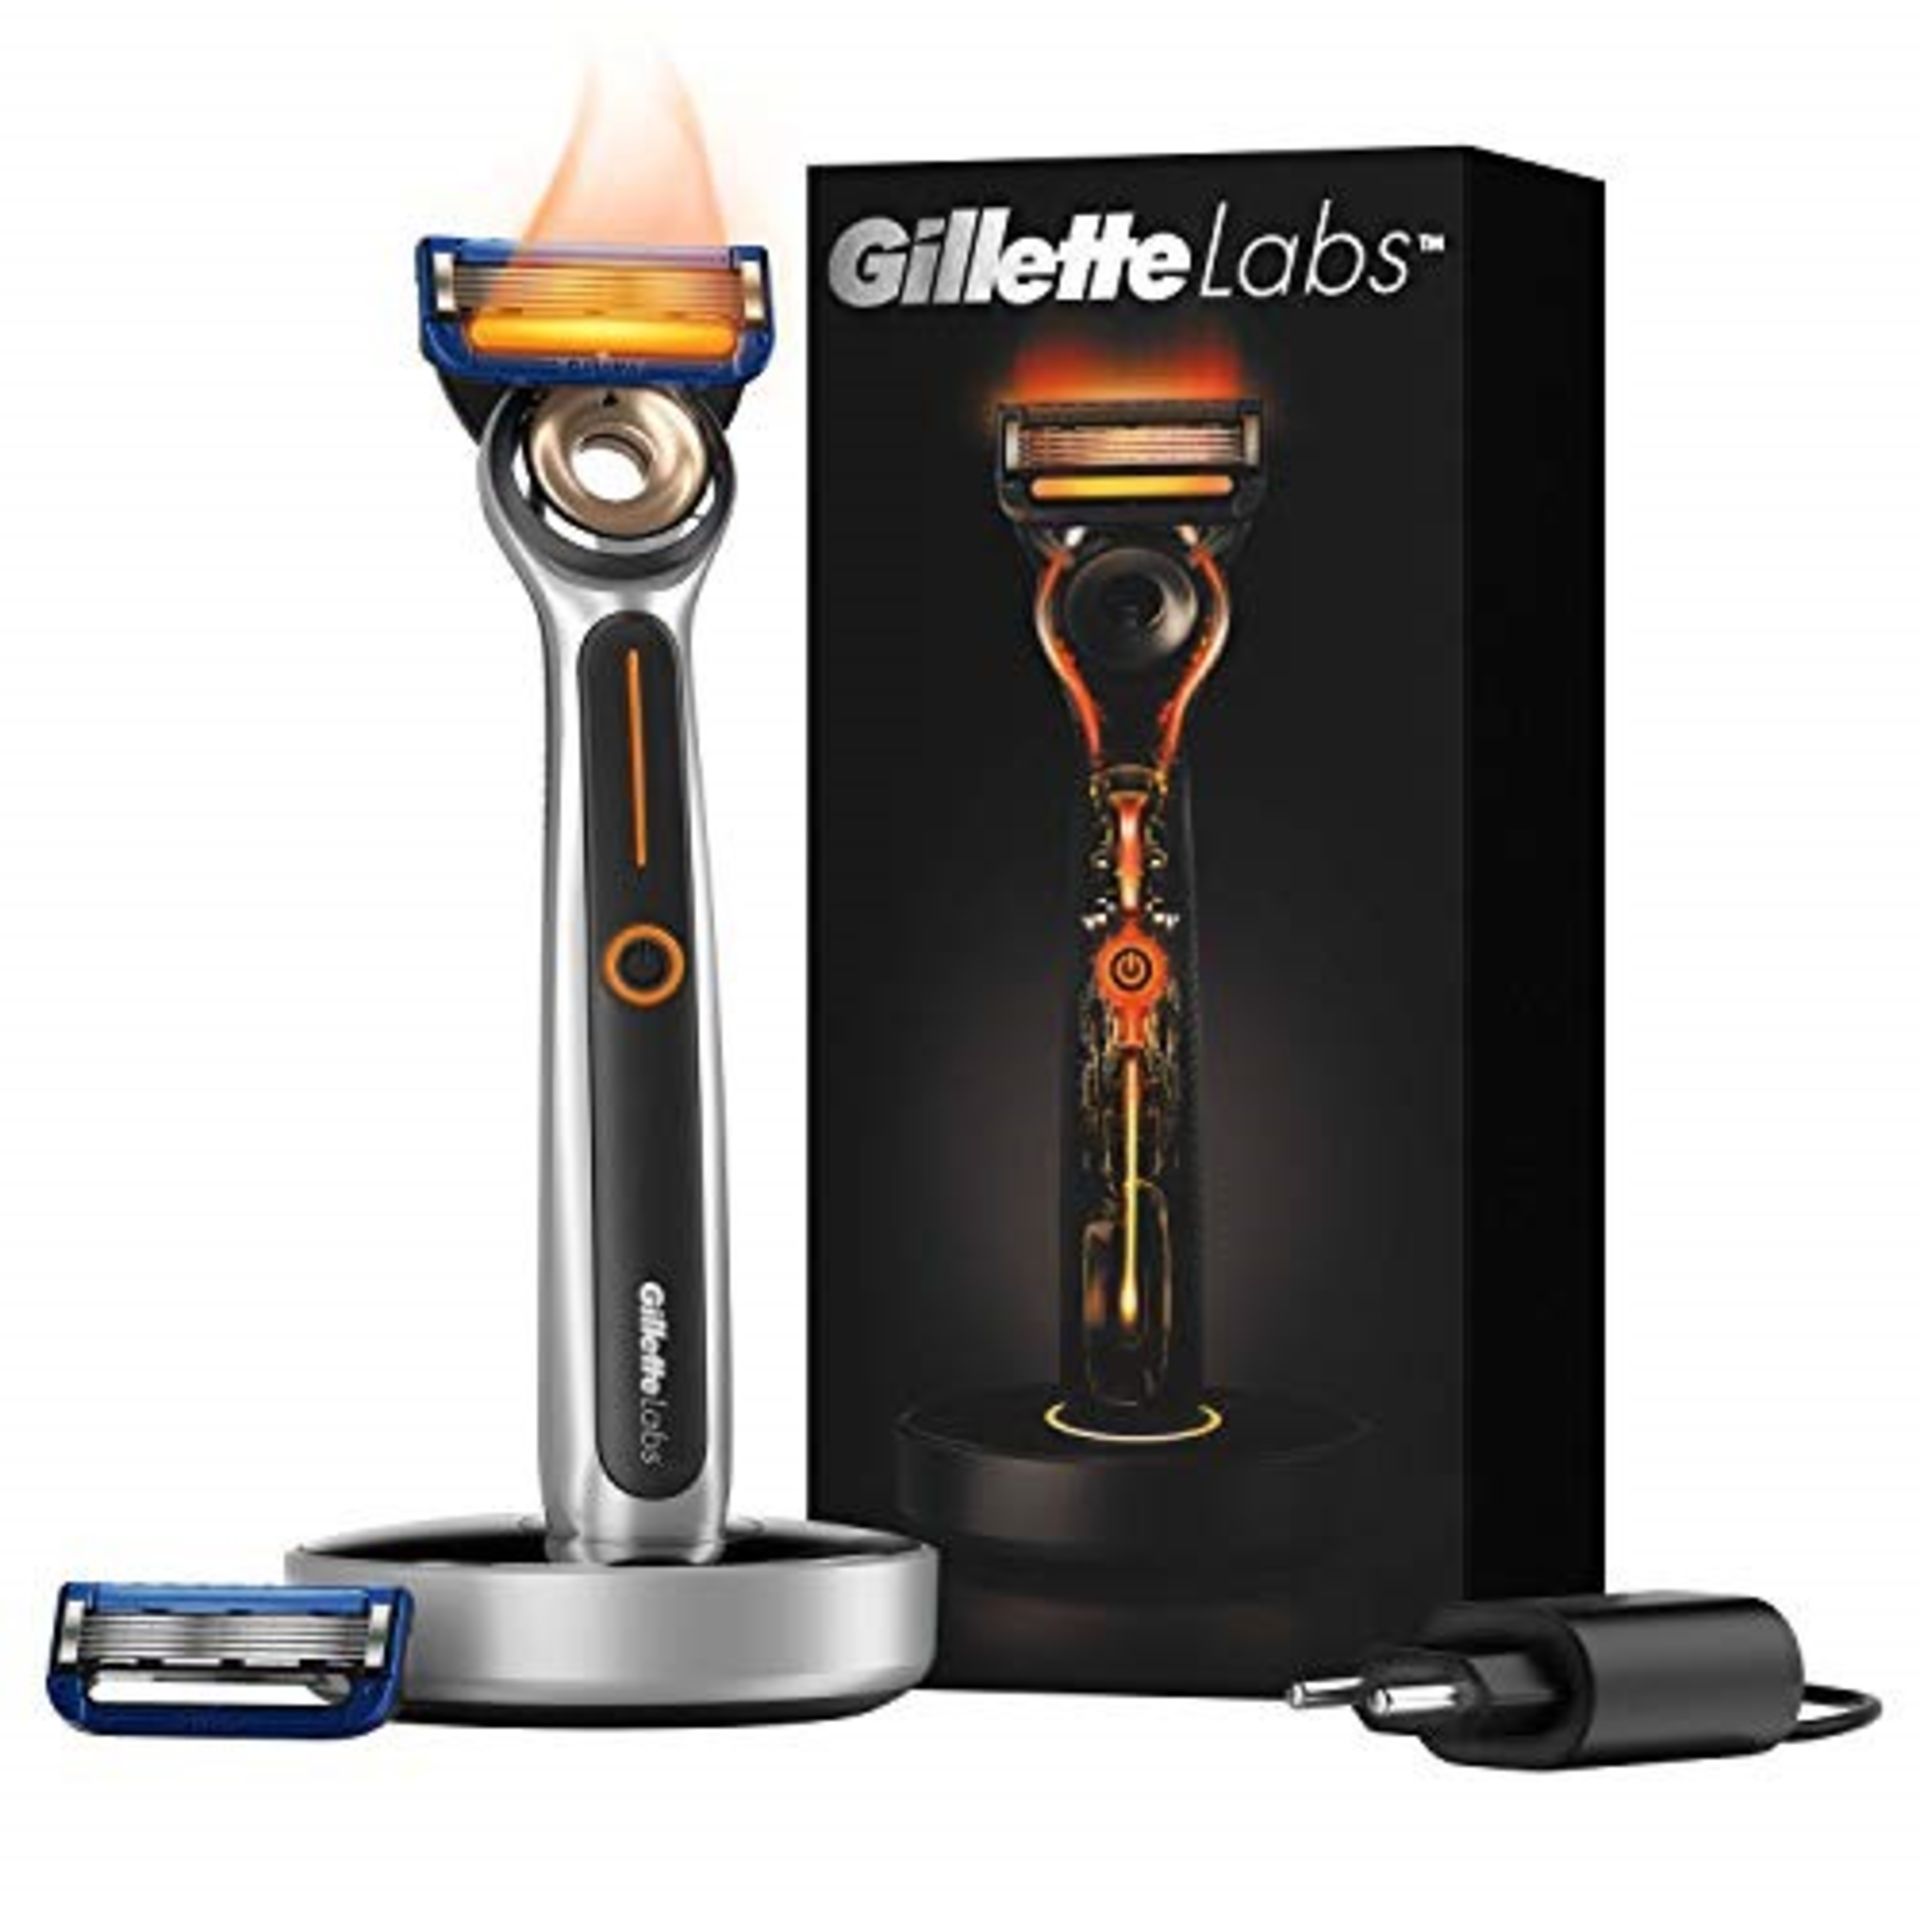 RRP £121.00 Gillette Labs Heated Razor For Men Starter Kit + 1 Blade, Gift Set Ideas for Him/Dad